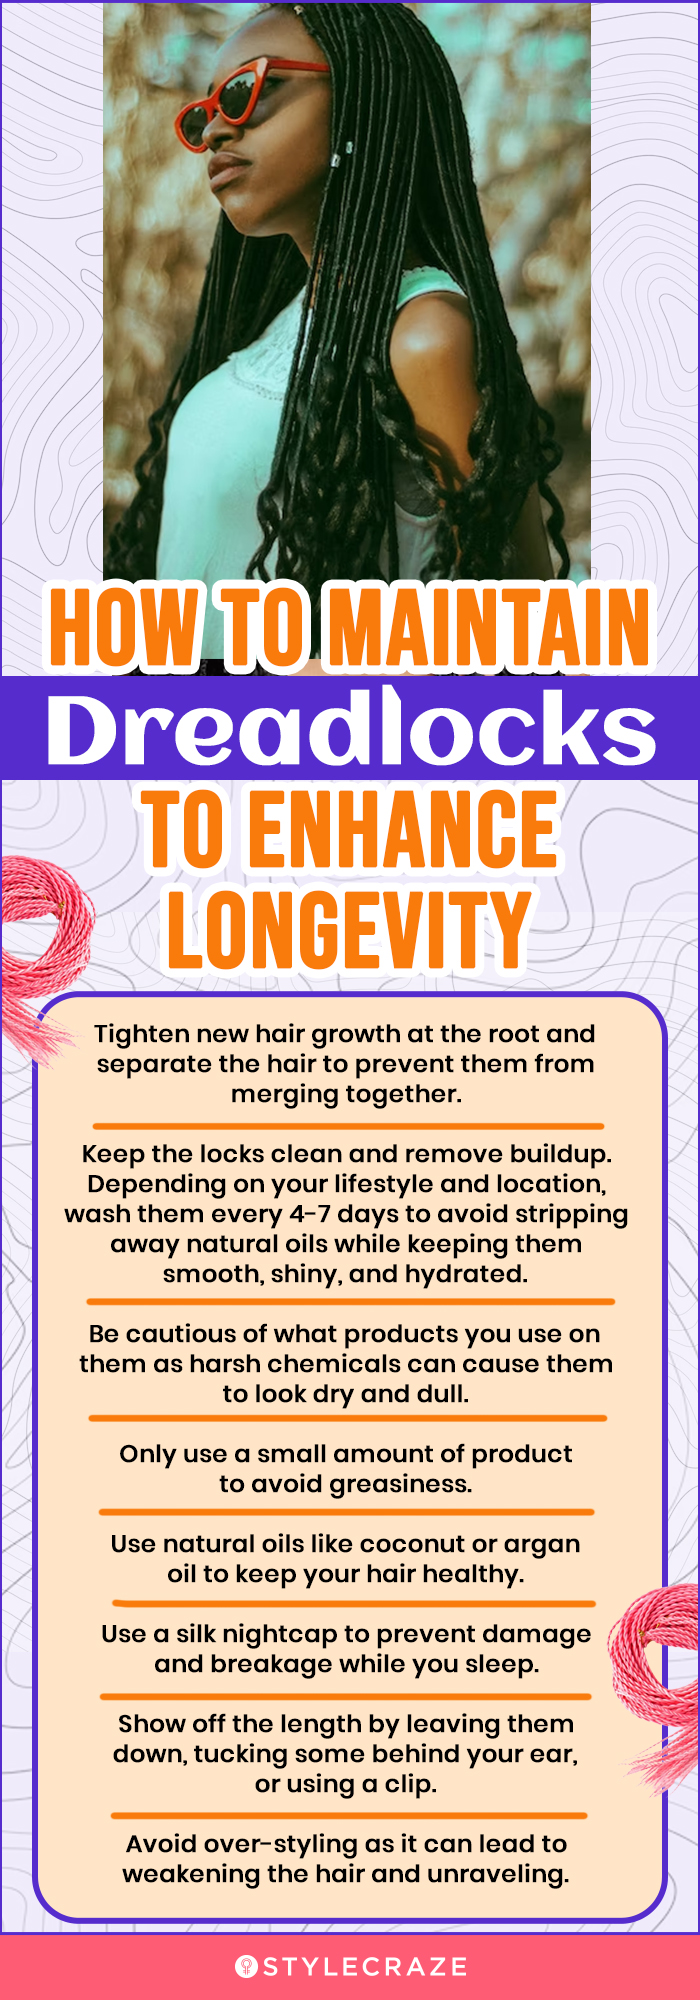 How To Maintain Dreadlocks To Enhance Longevity (infographic)